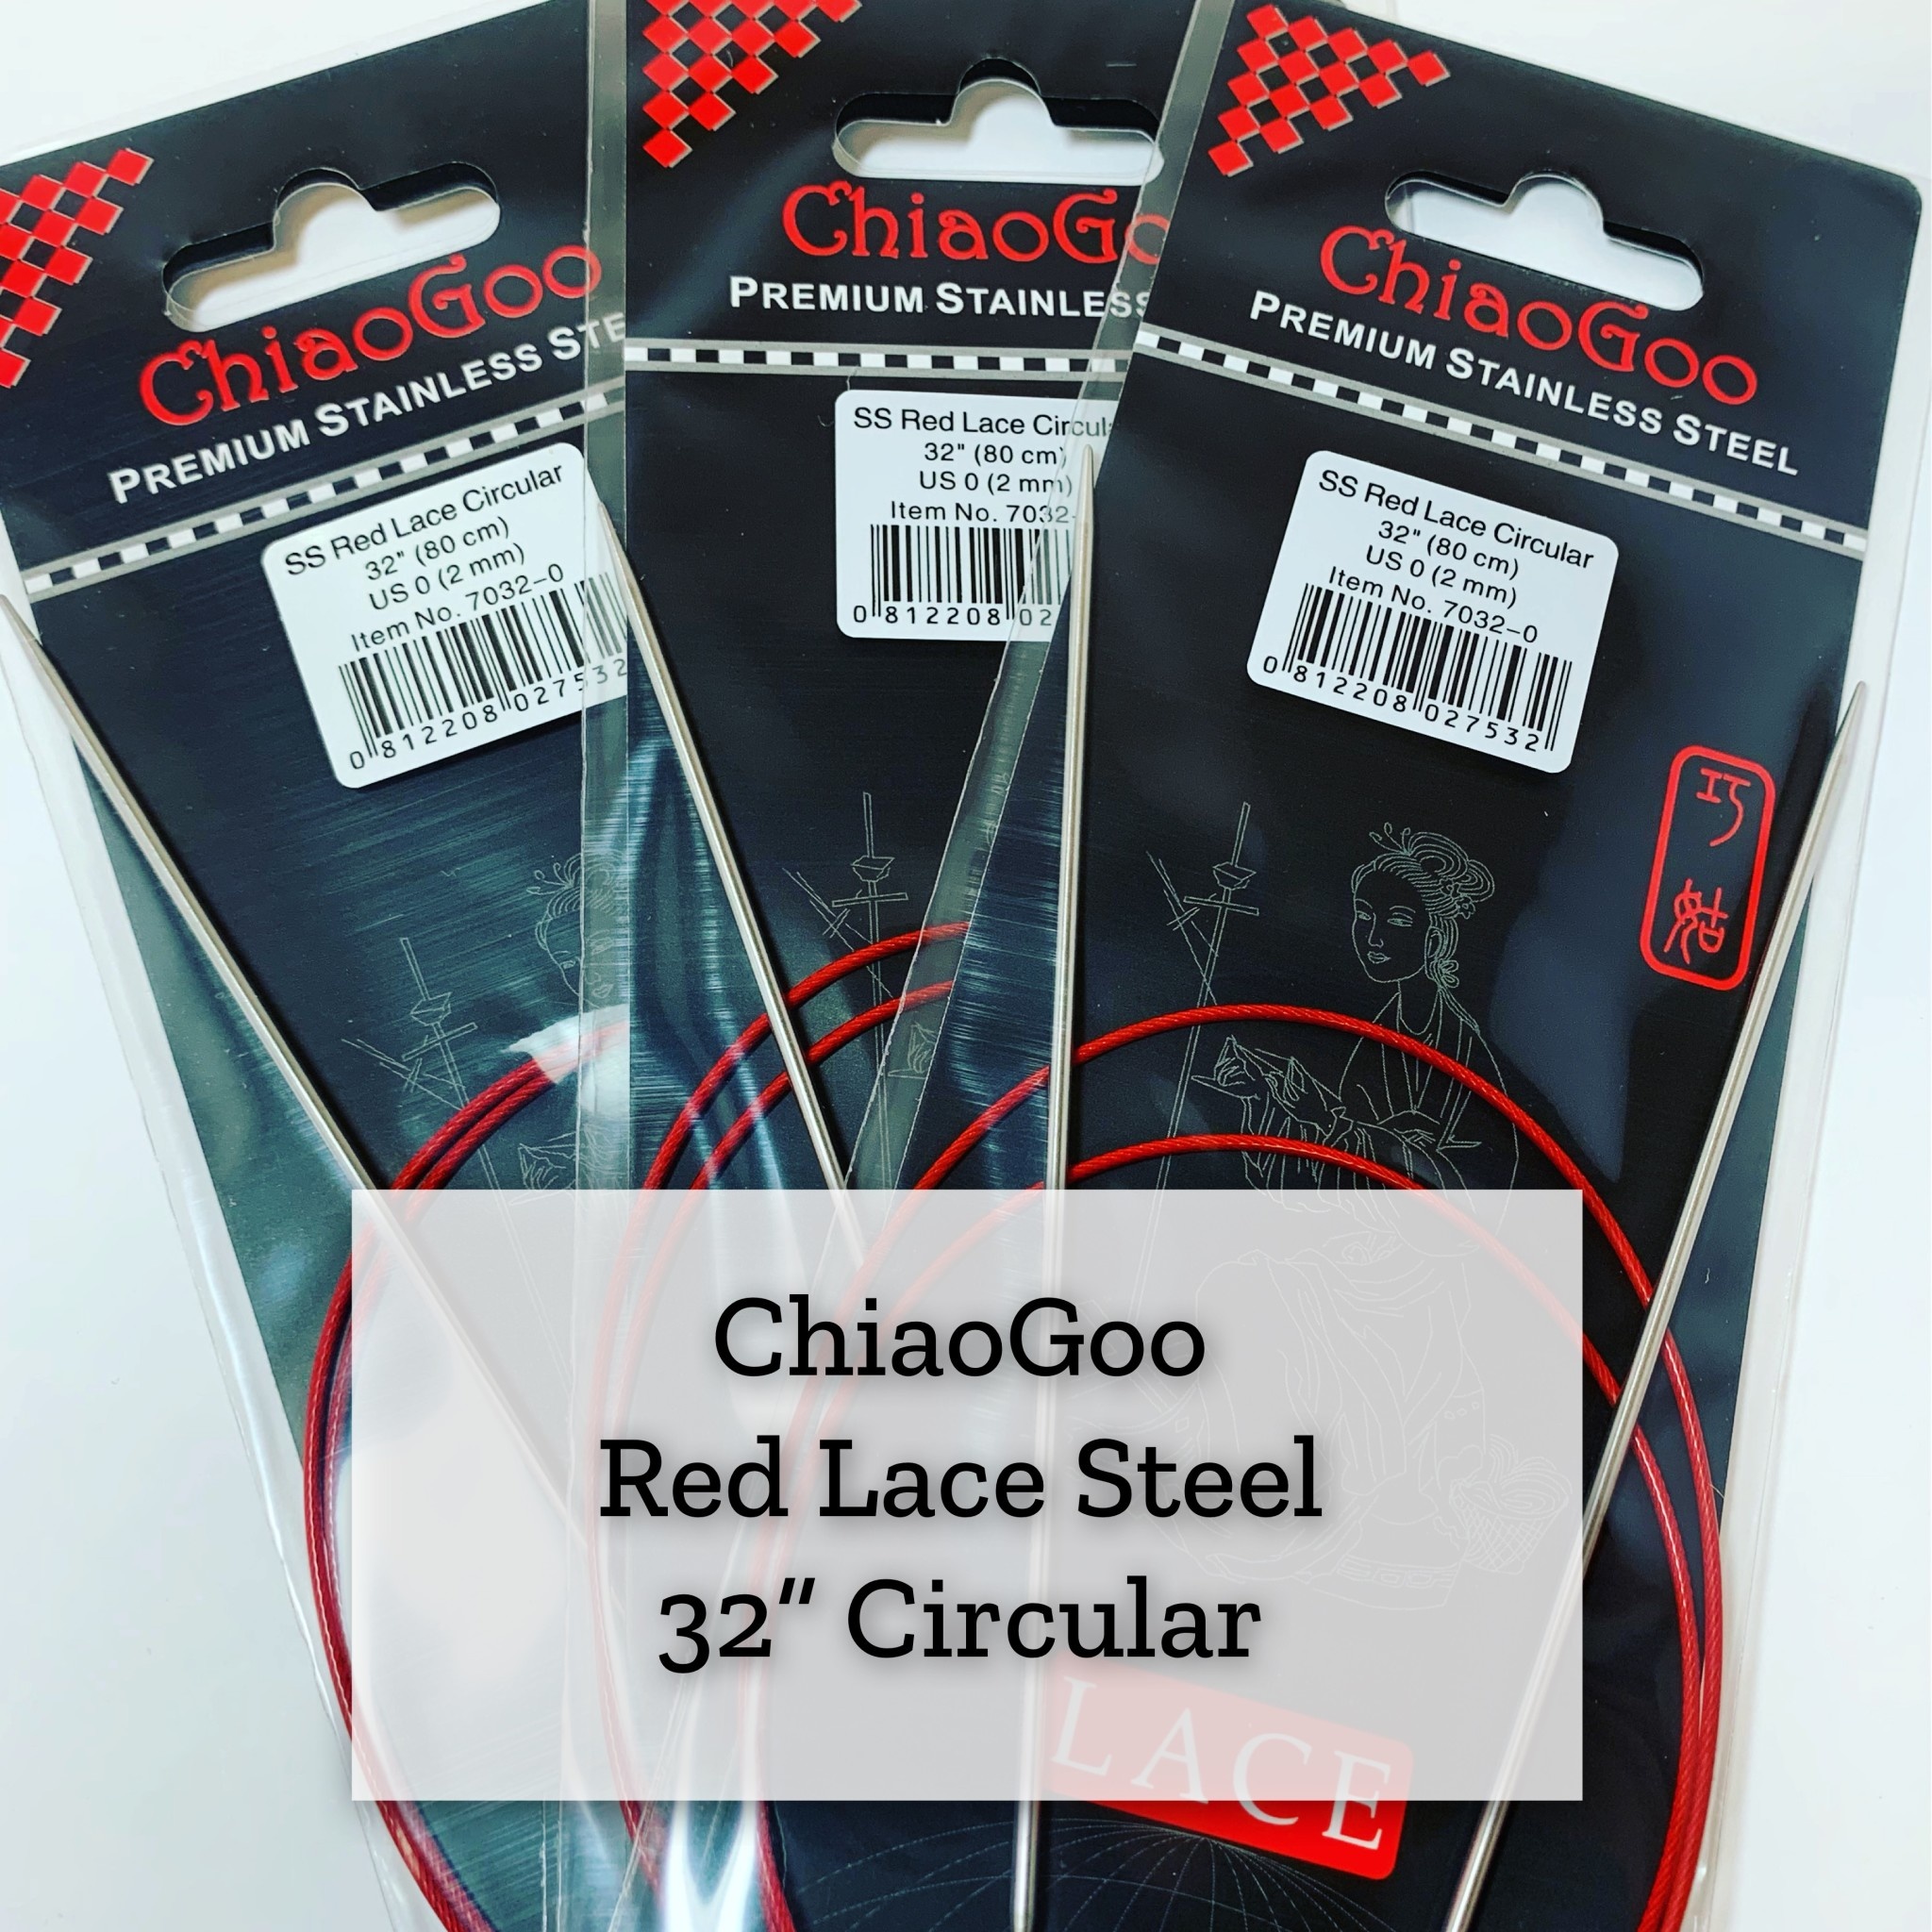 ChiaoGoo Red Lace Steel - 32" 4.5 mm